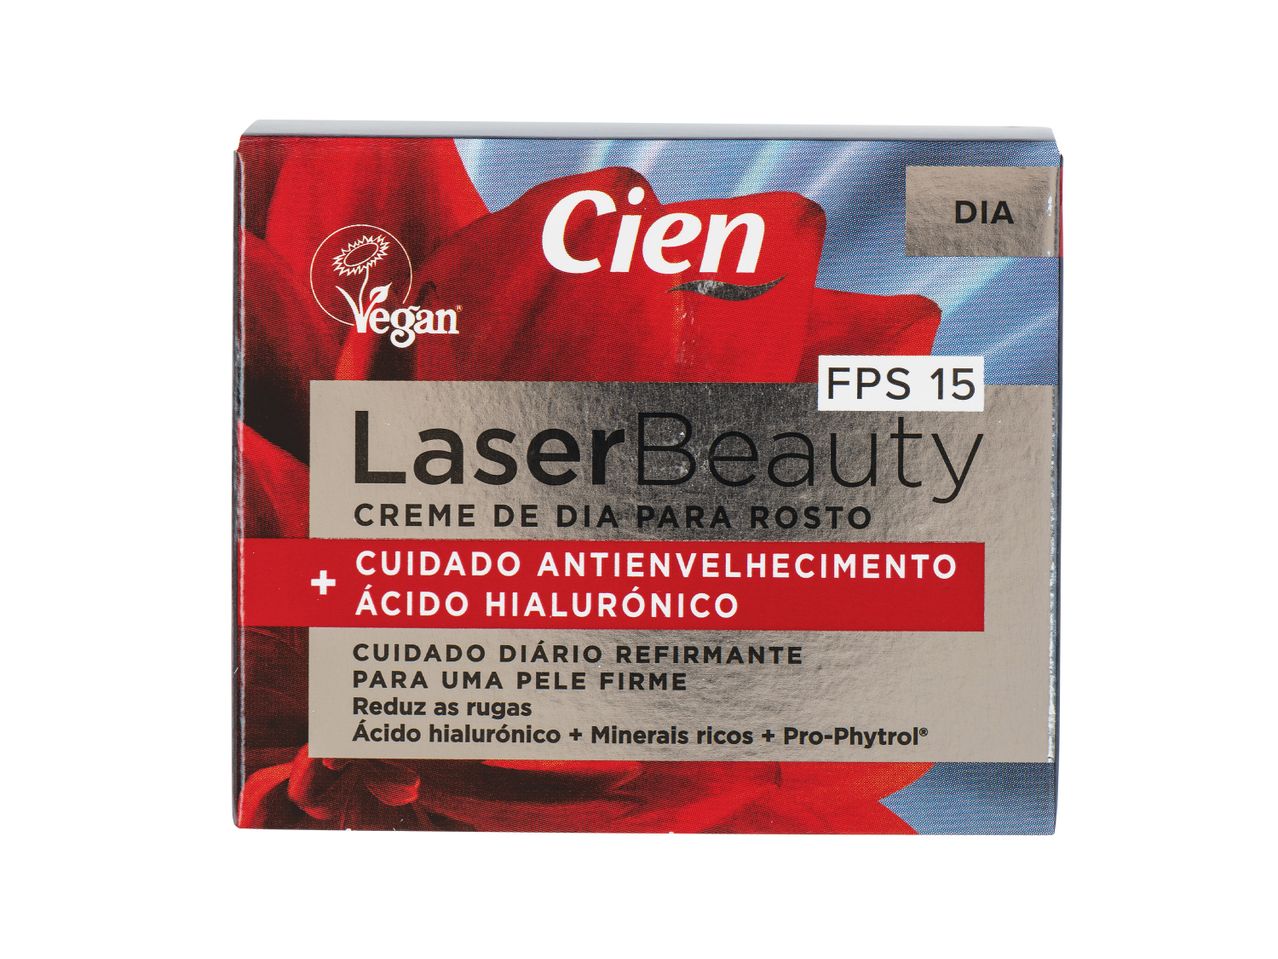 Ver empliada: Cien® Creme de Rosto Laser Beauty - Imagem 1